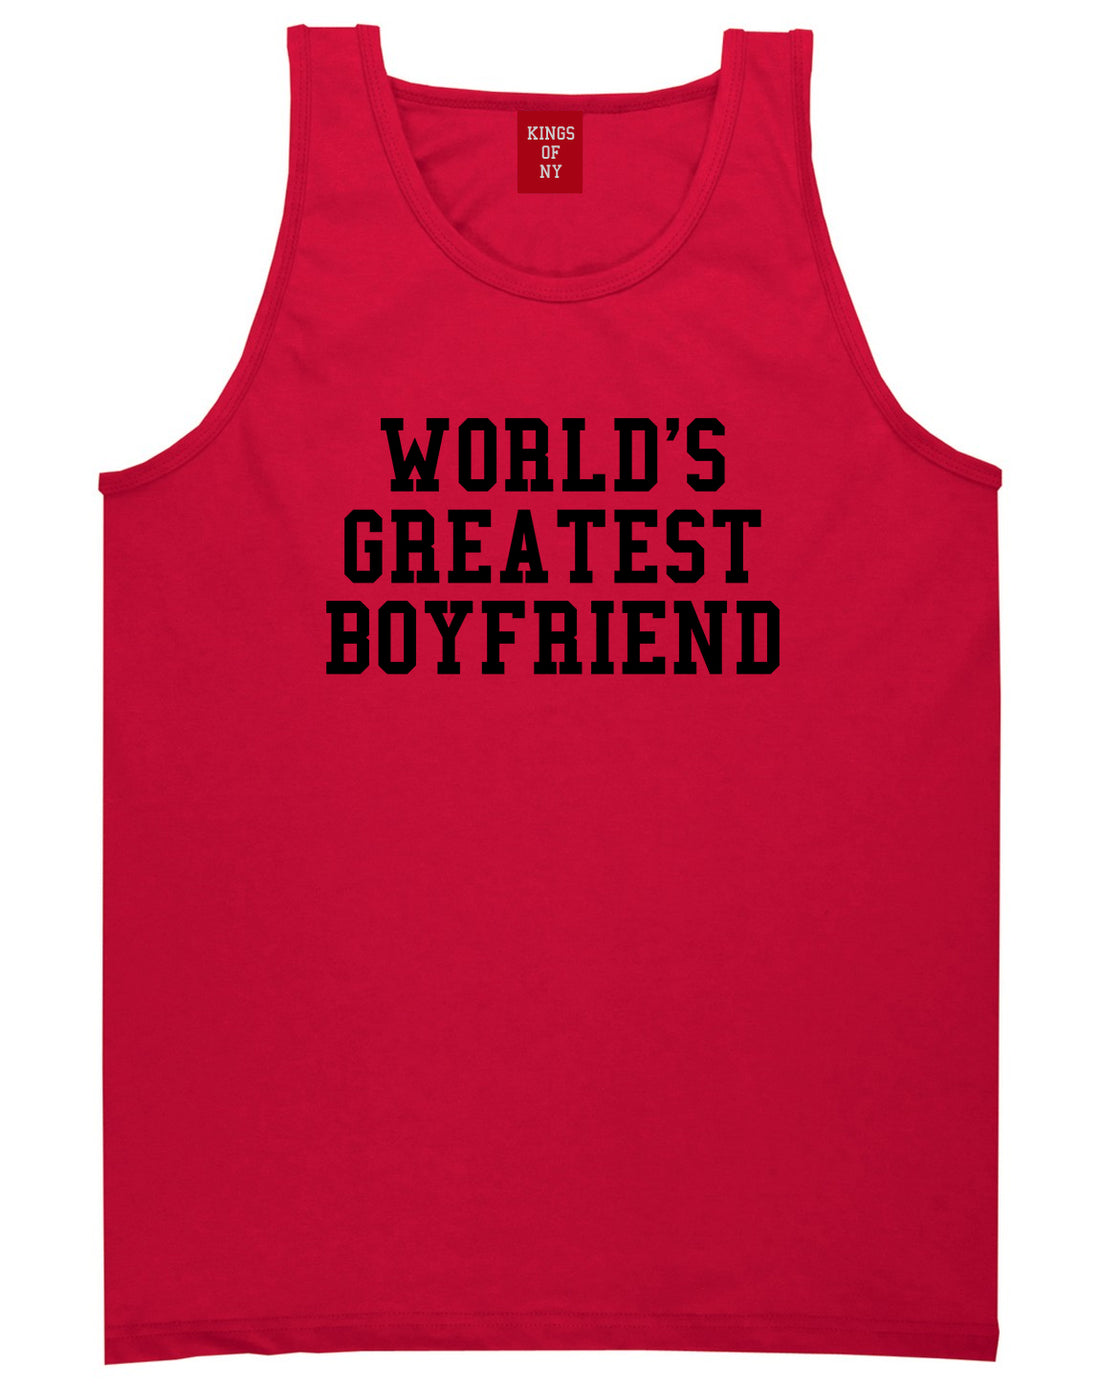 Worlds Greatest Boyfriend Funny Birthday Gift Mens Tank Top T-Shirt Red